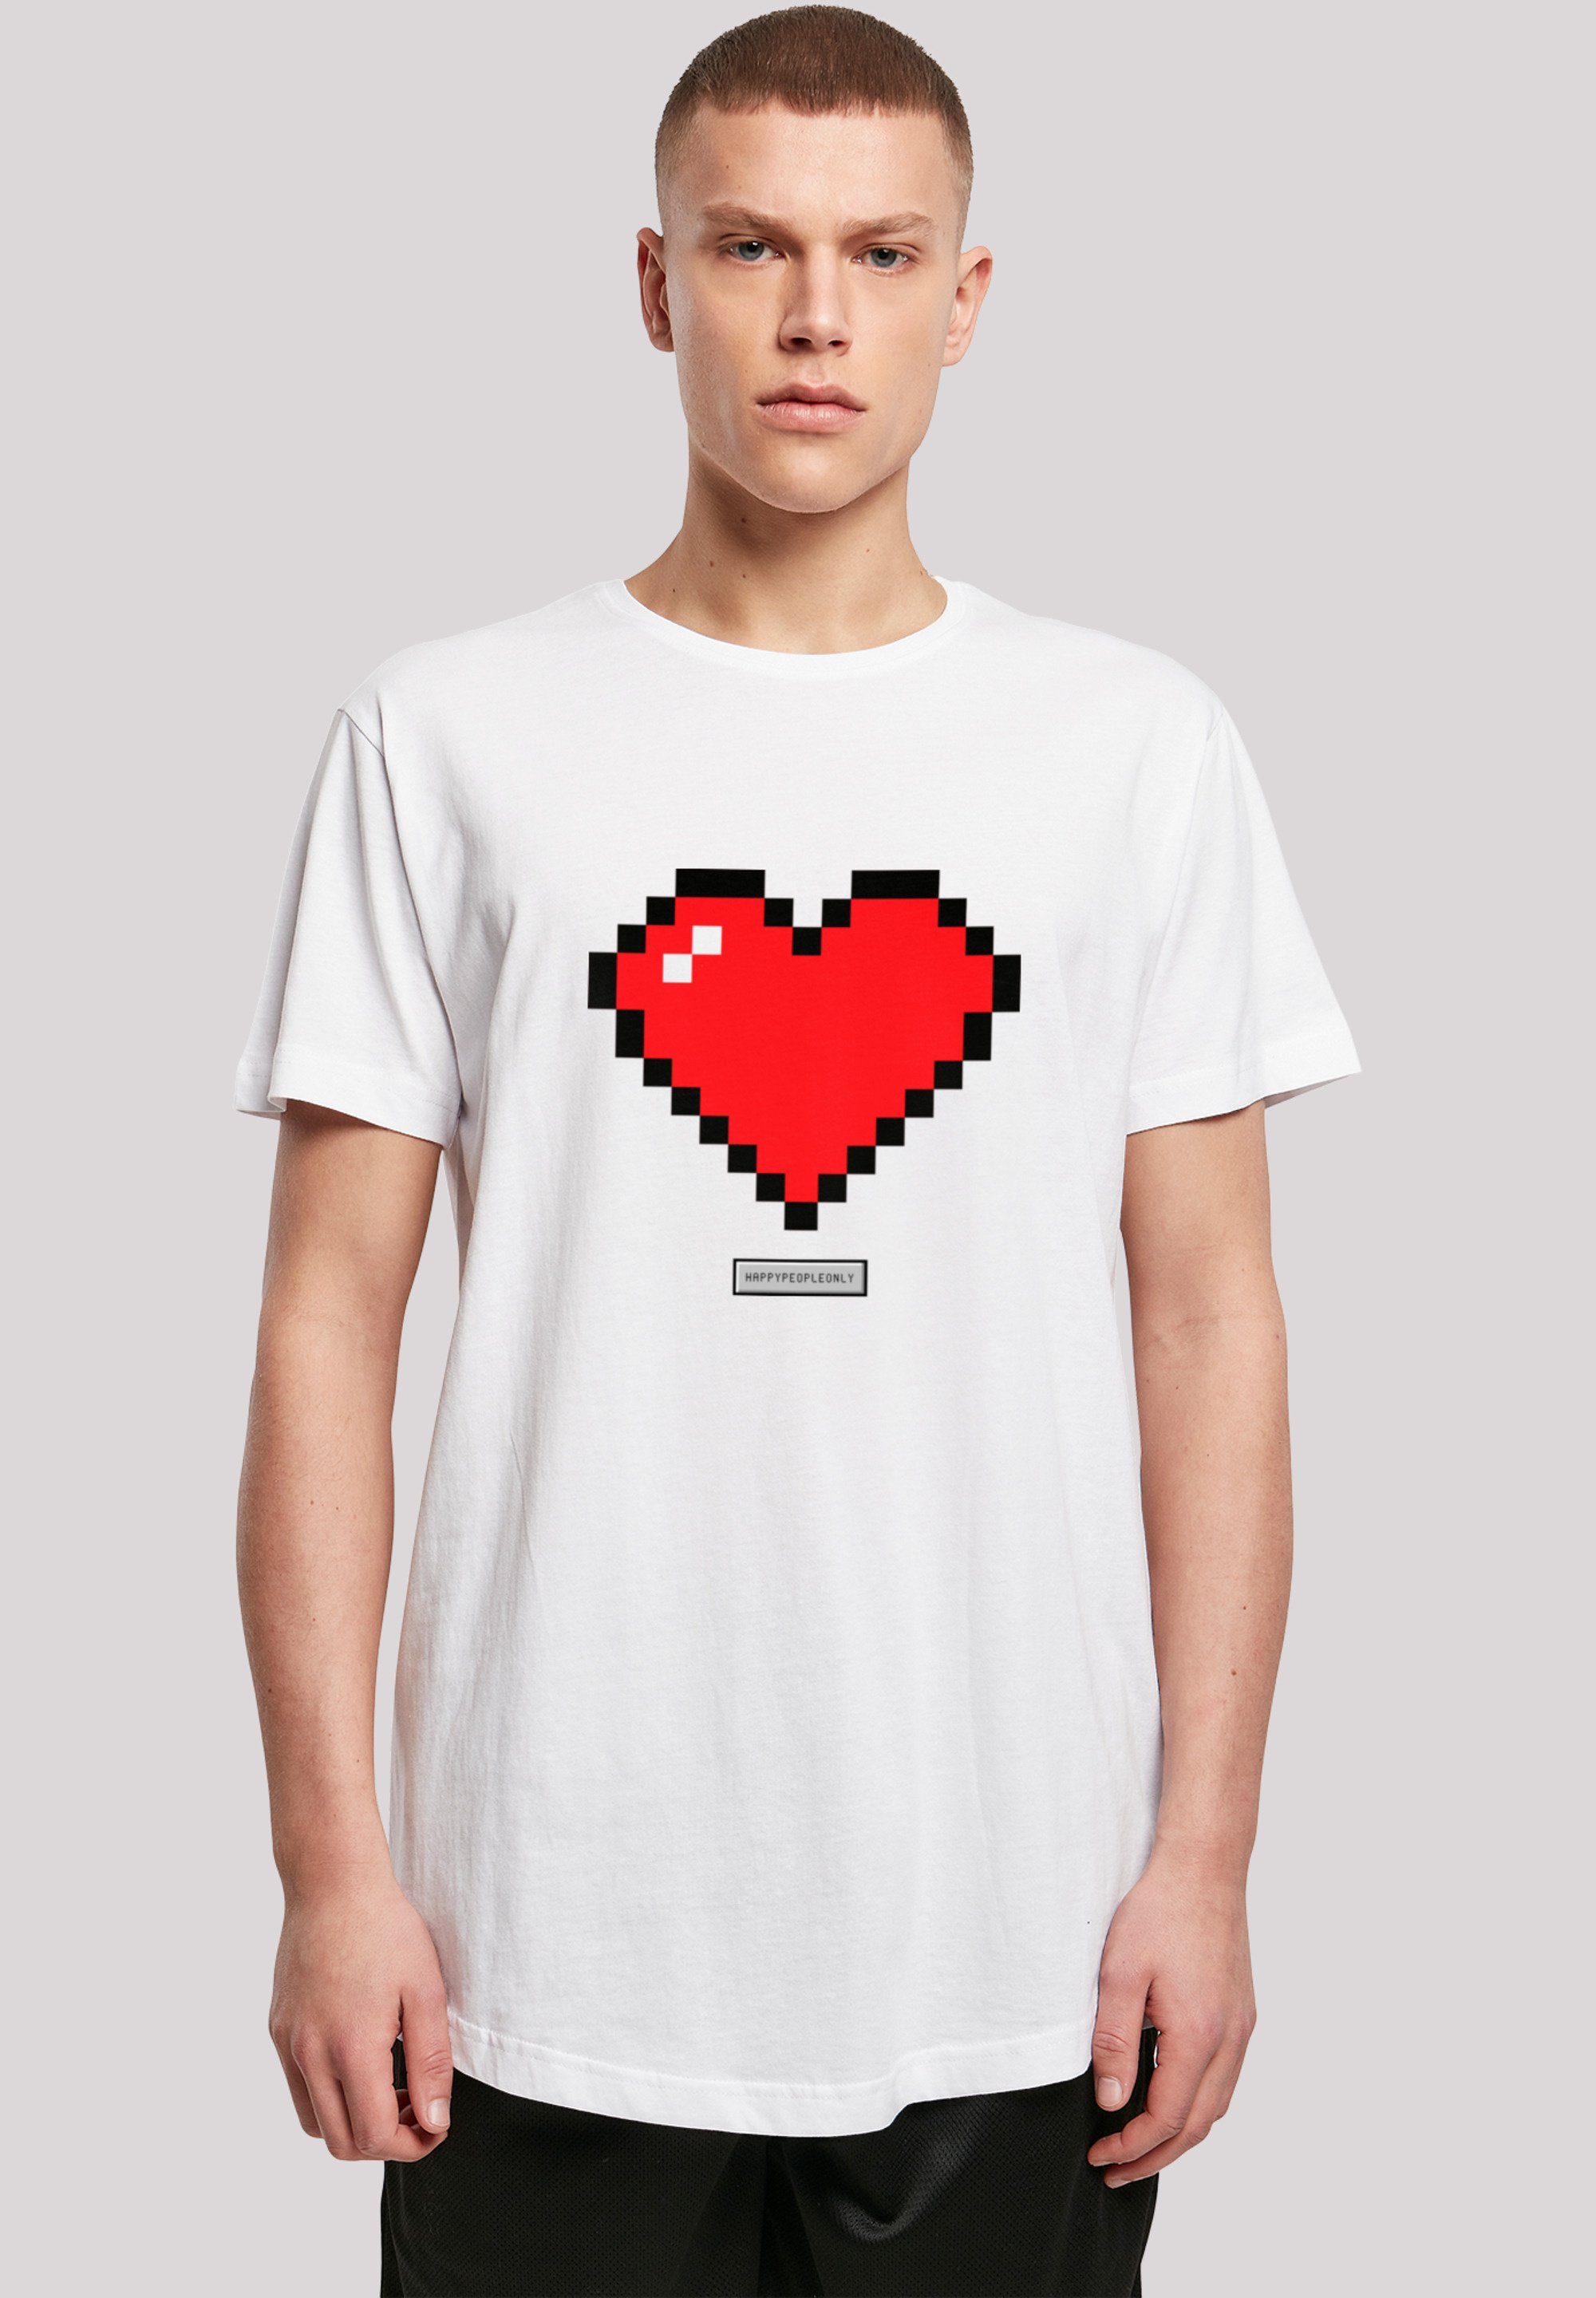 T-Shirt Herz People Happy Vibes weiß F4NT4STIC Good Print Pixel